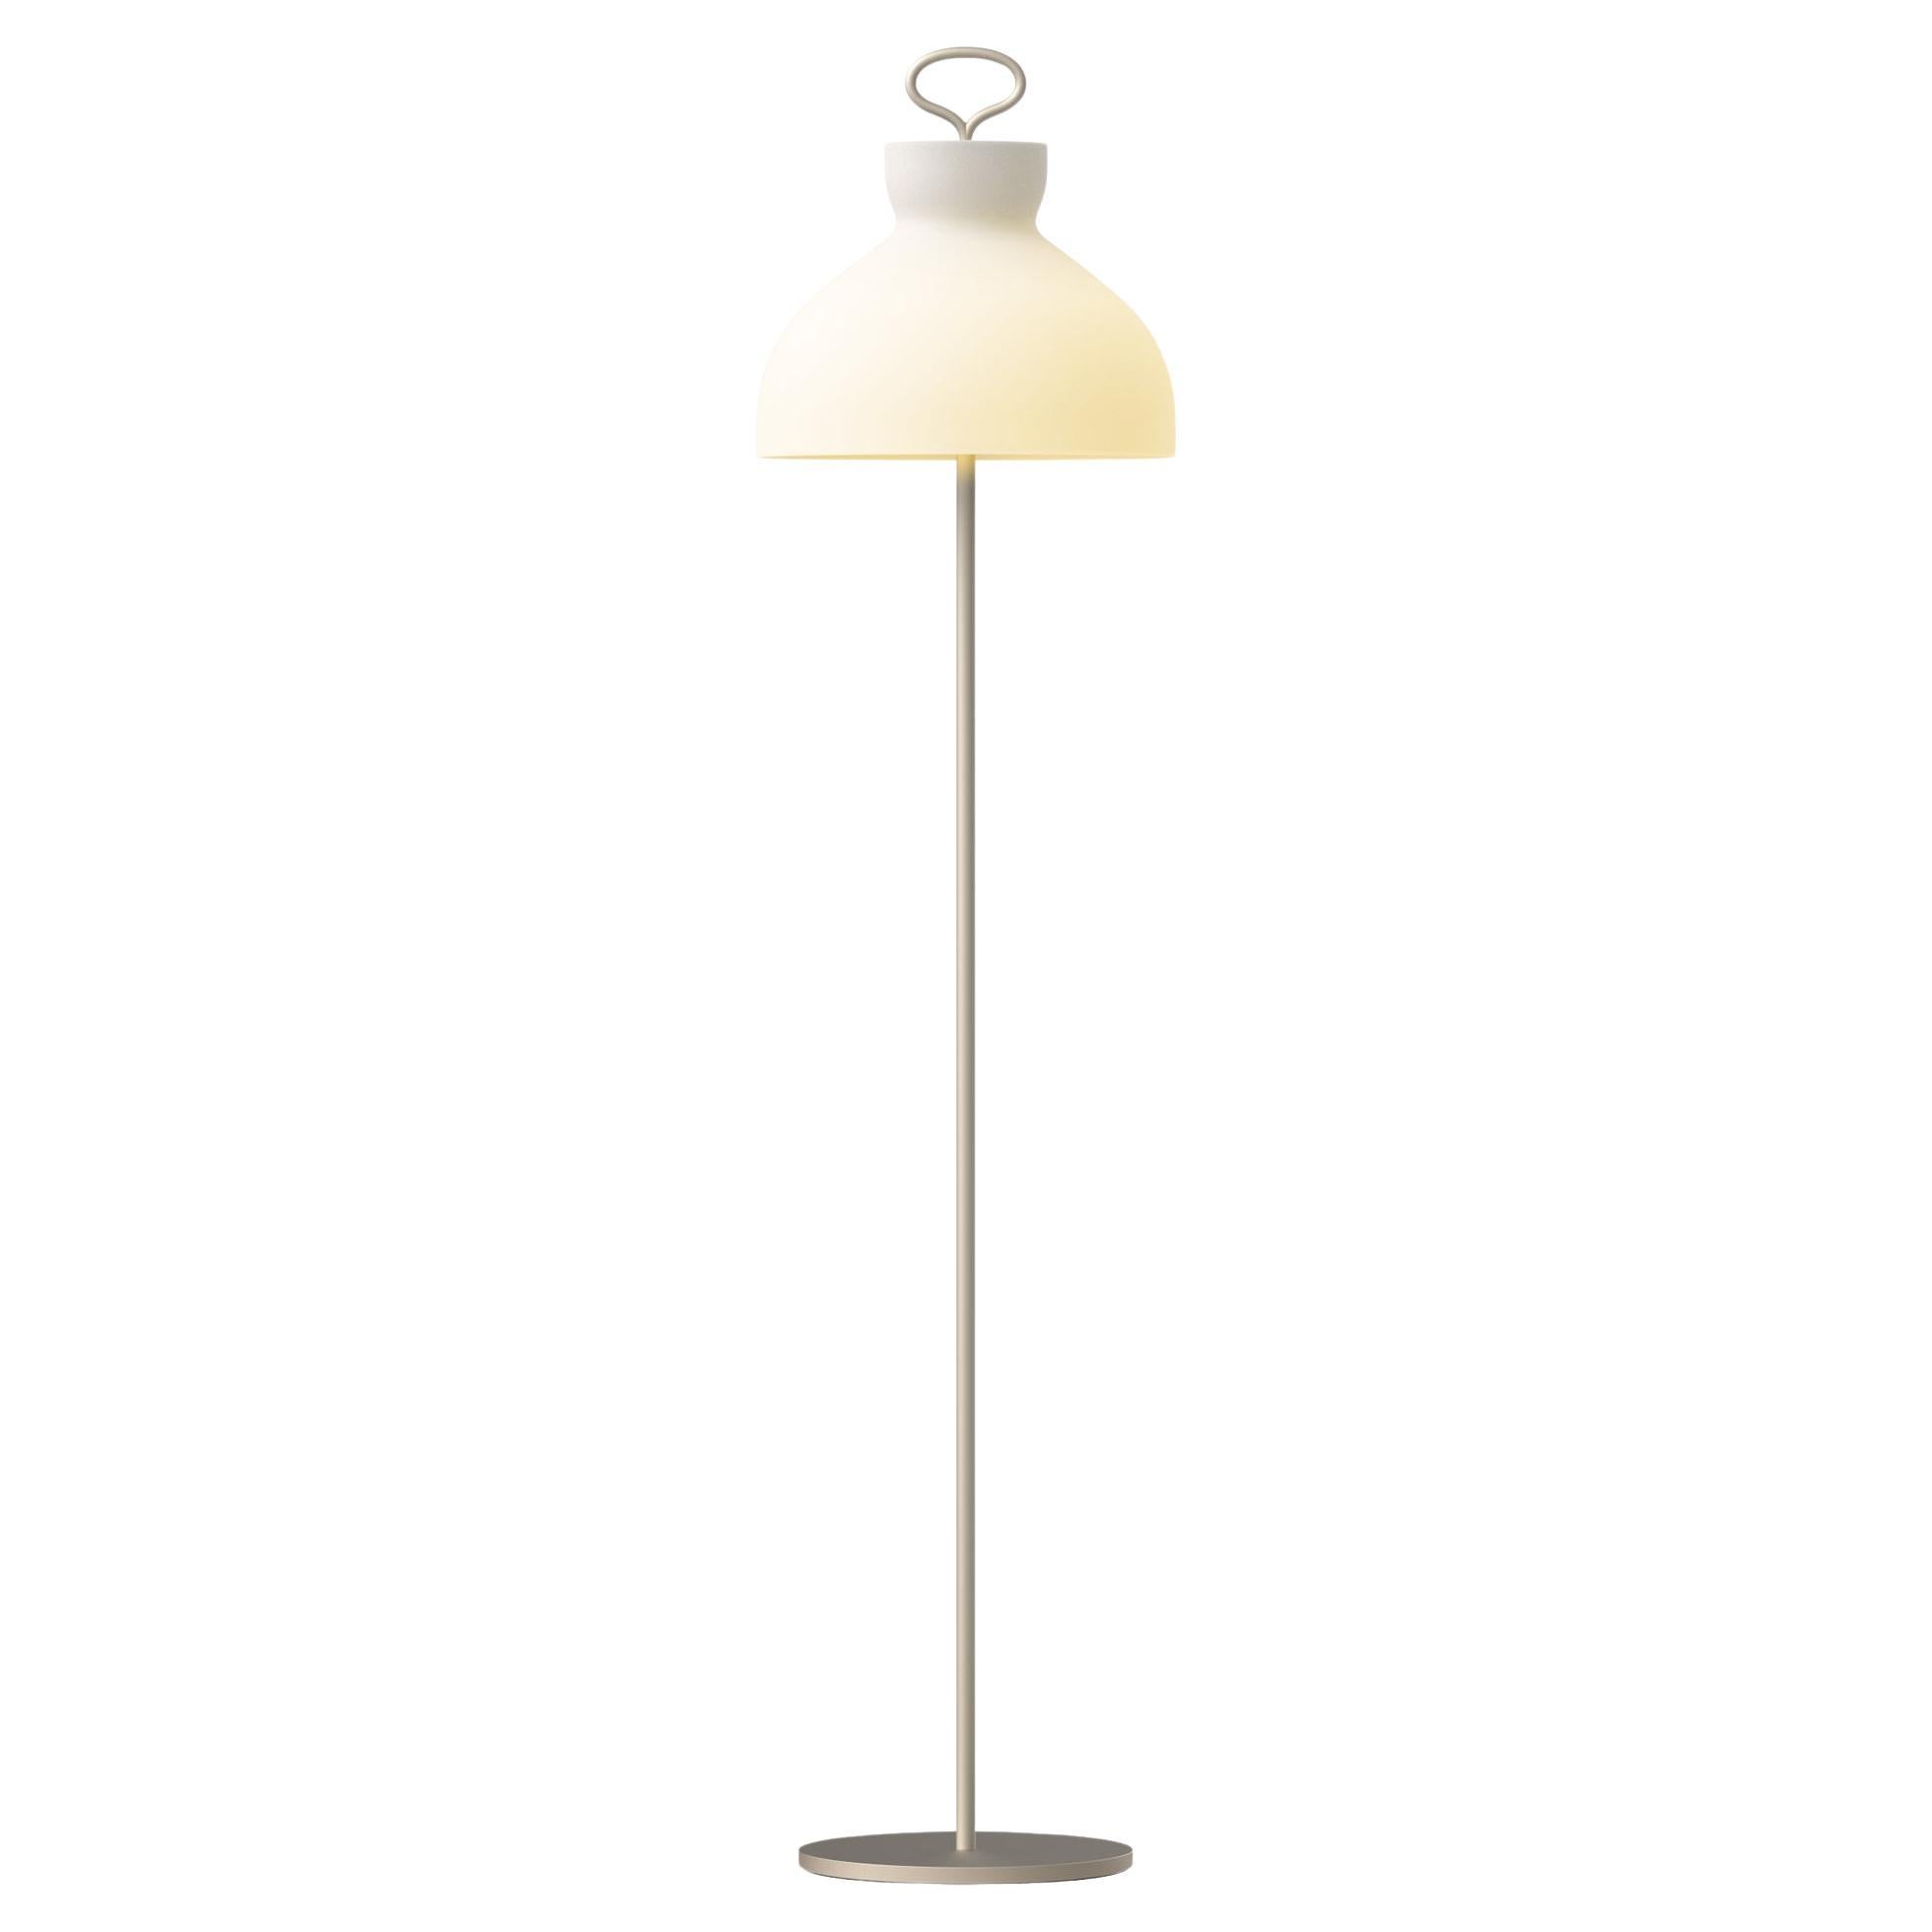 Ignazio Gardella 'Arenzano Terra' Floor Lamp in Satin Nickel and Glass For Sale